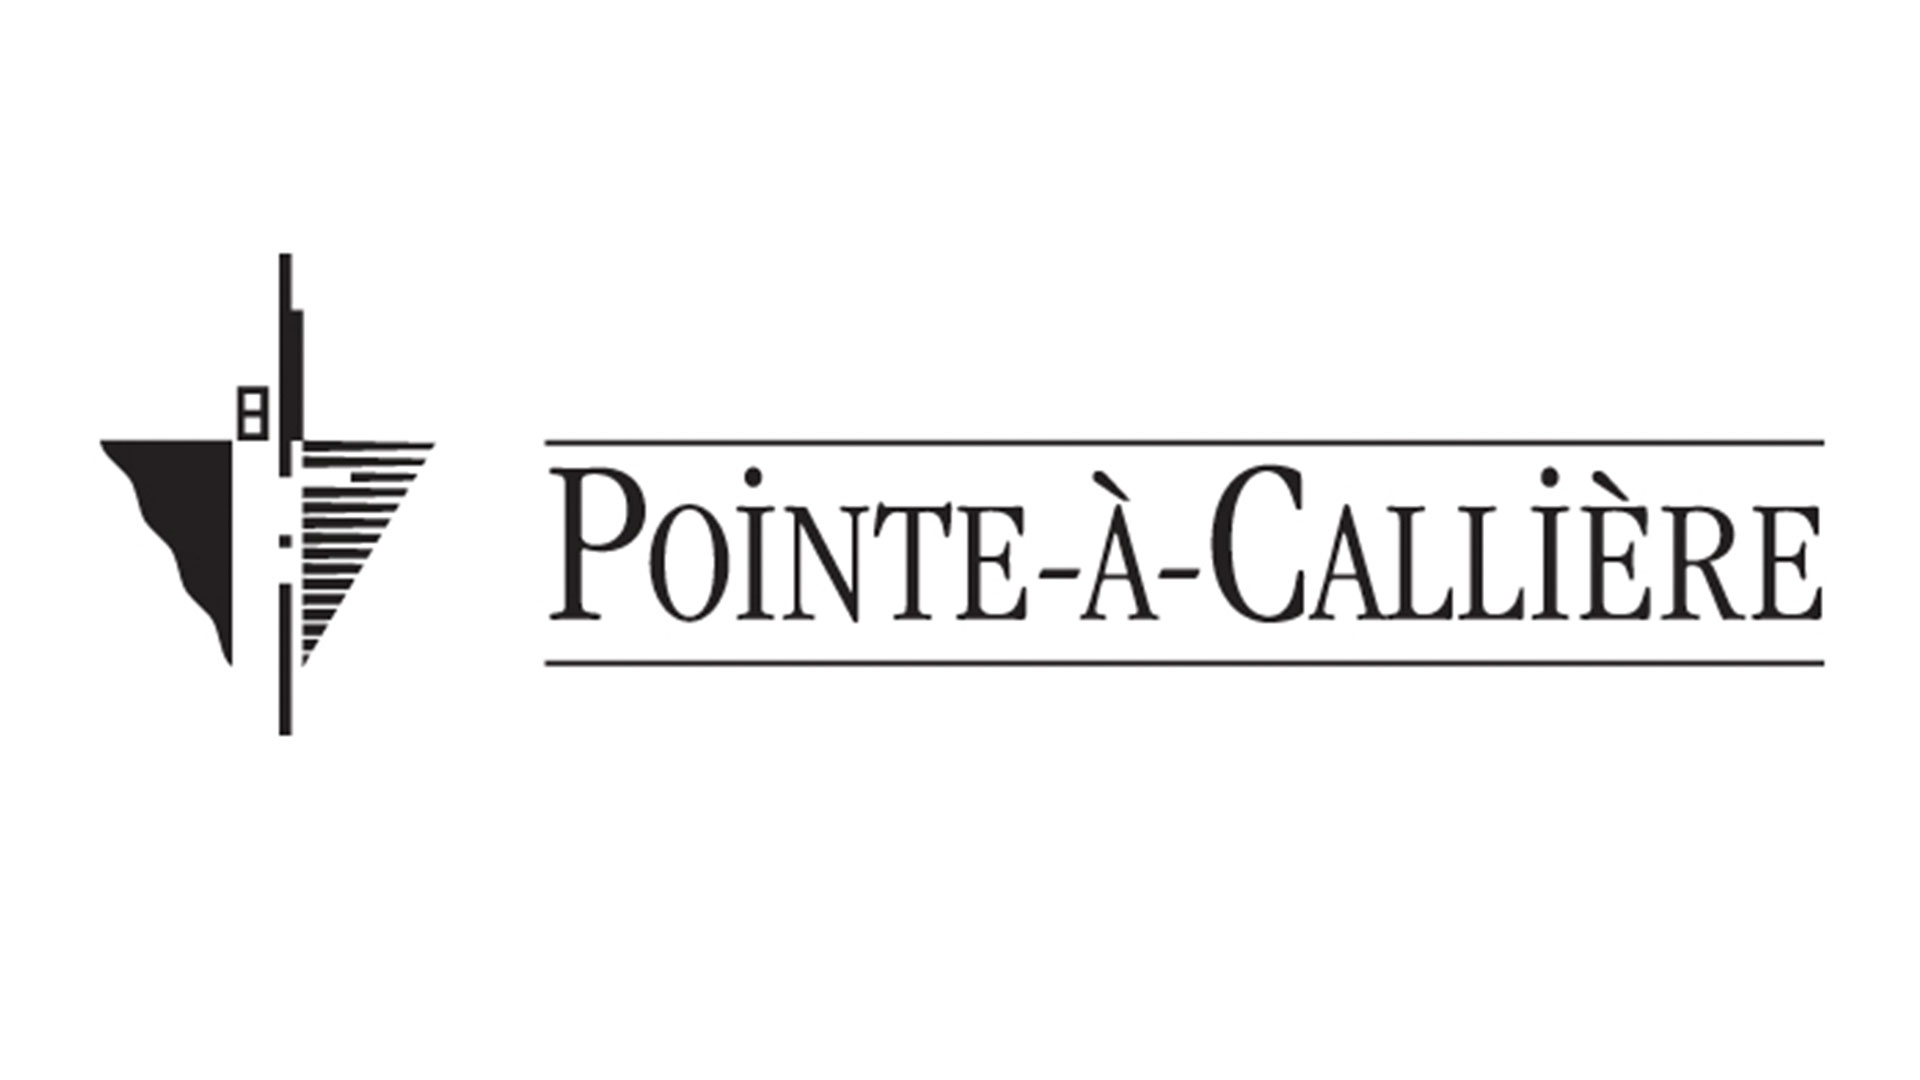 Pointe-a-Callière